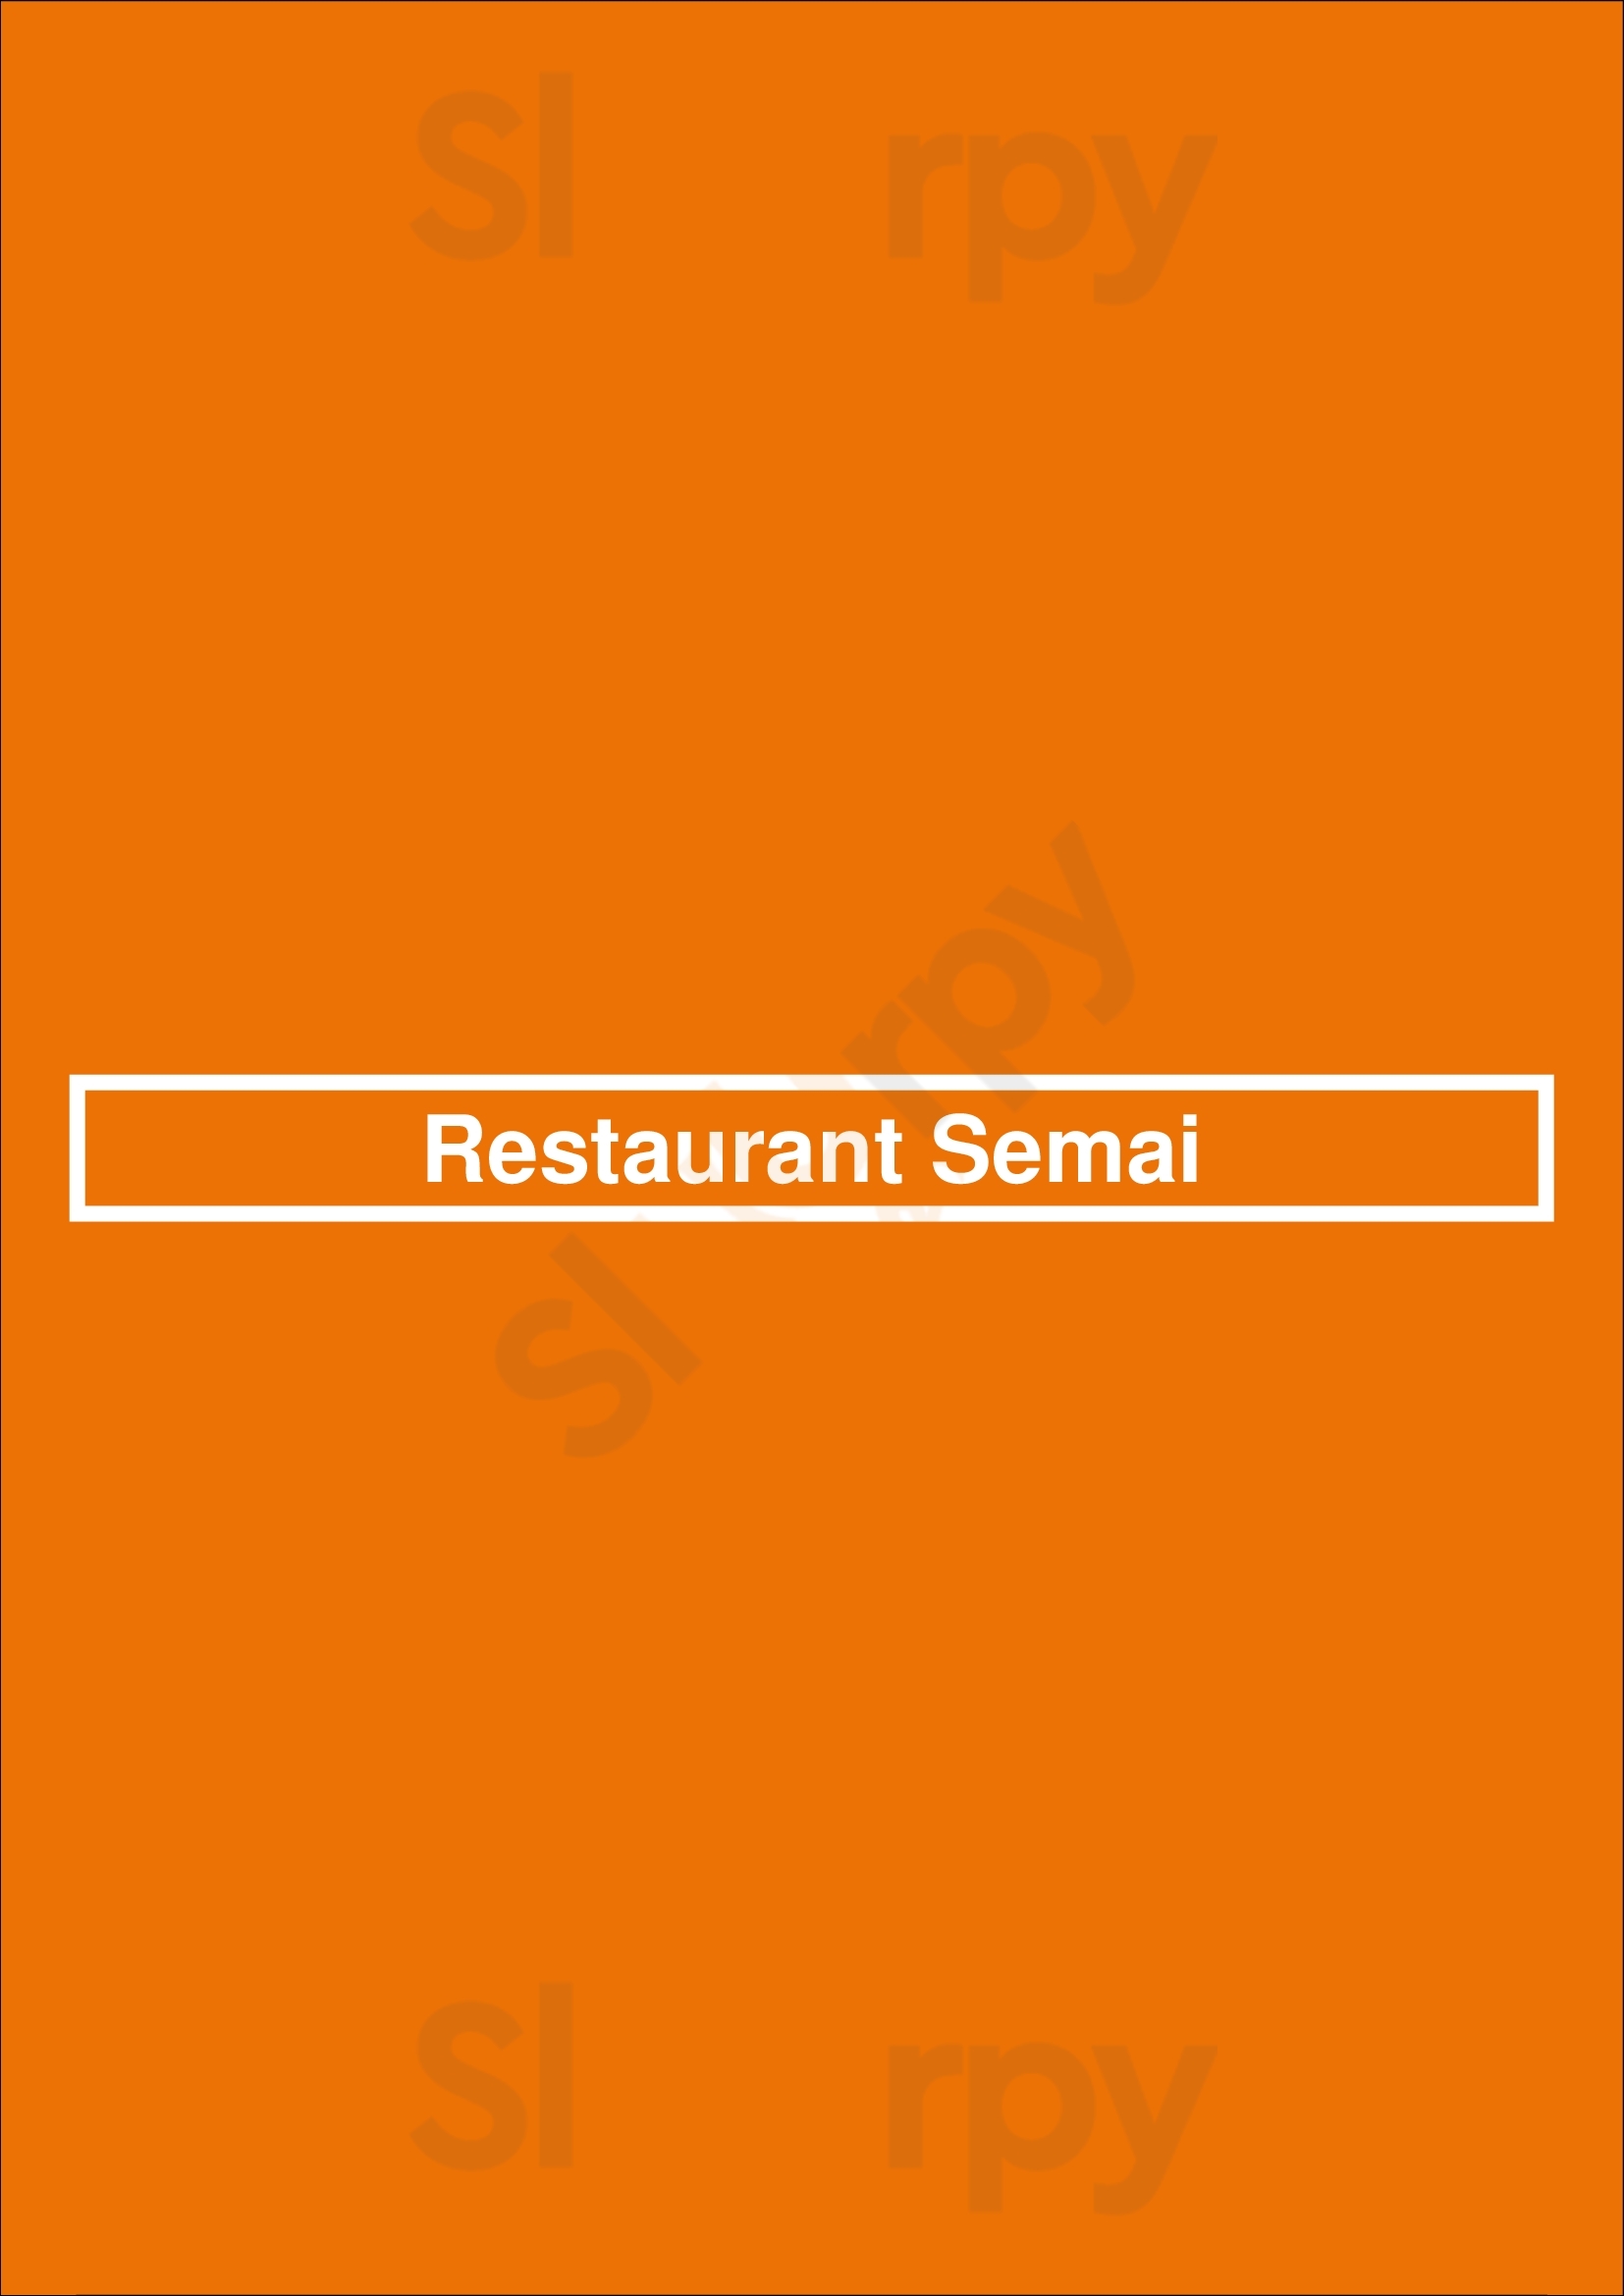 Restaurant Semai Amsterdam Menu - 1